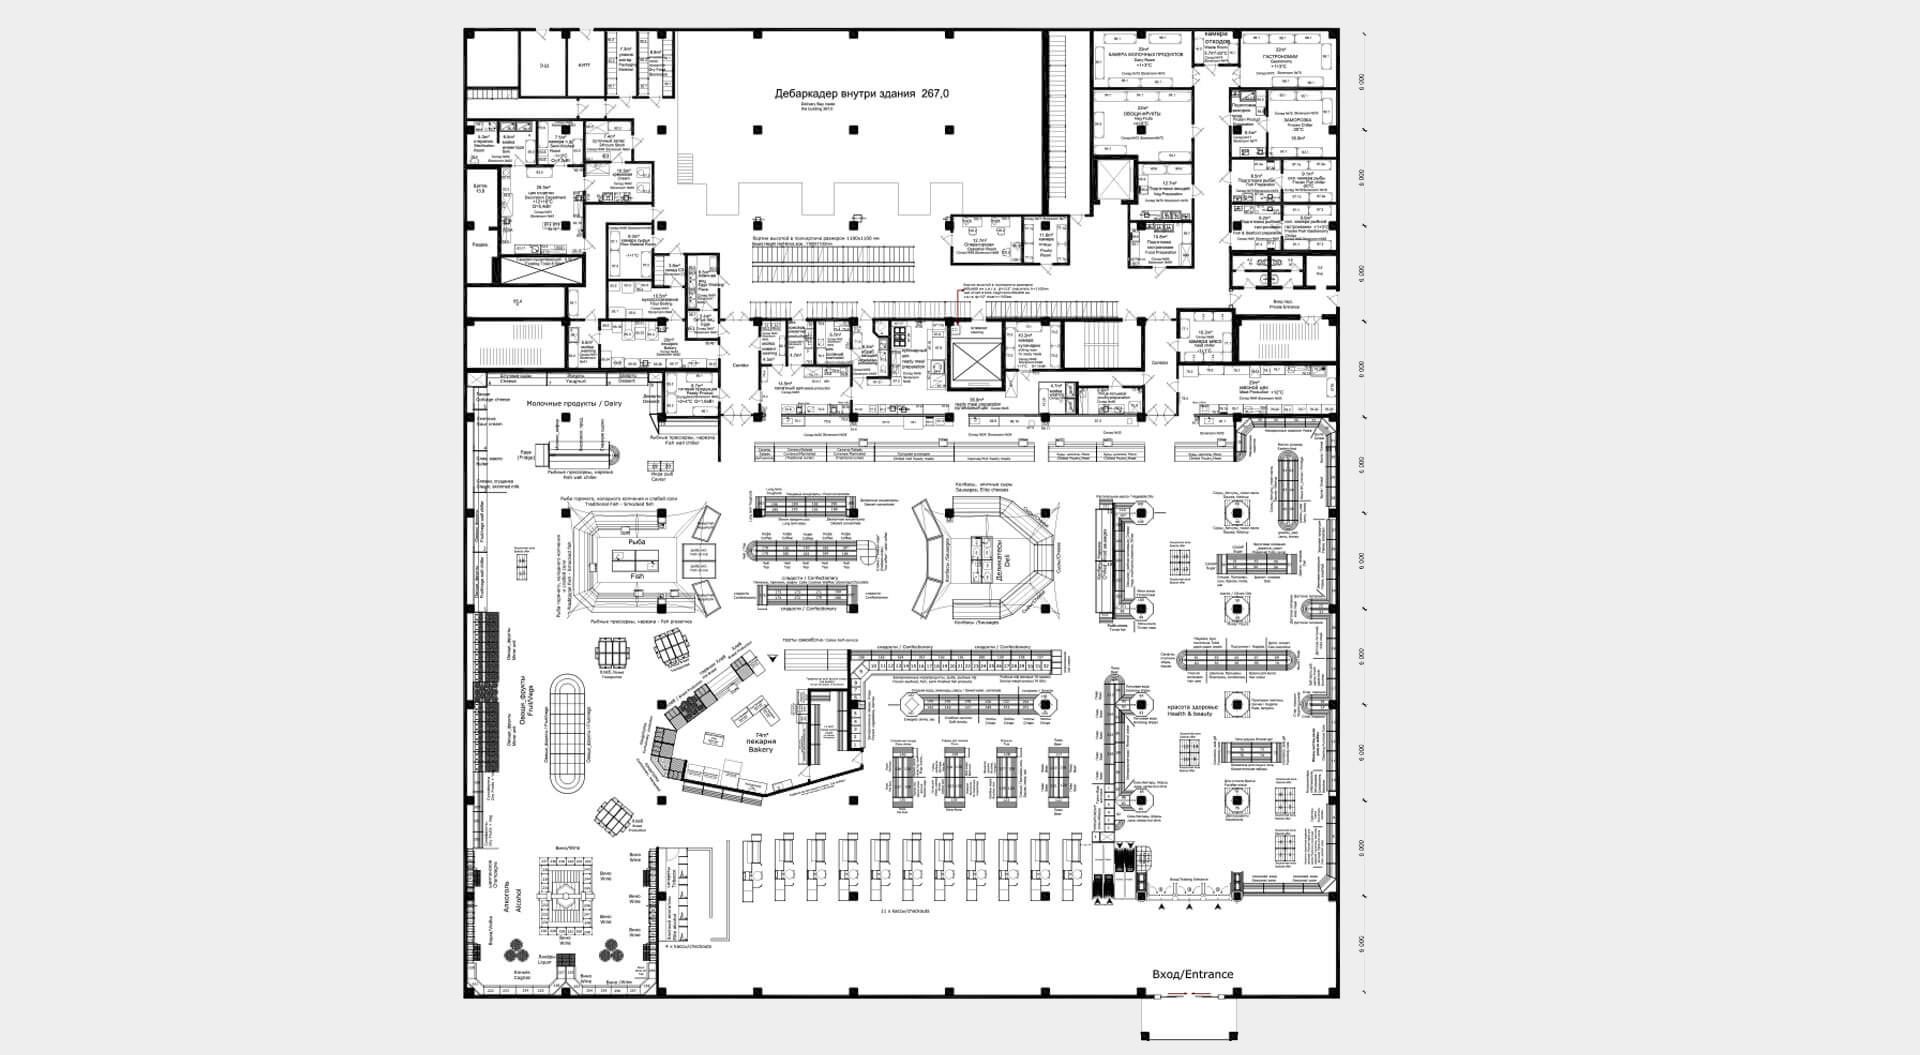 Victoria supermarket floor plan and merchandising system layout